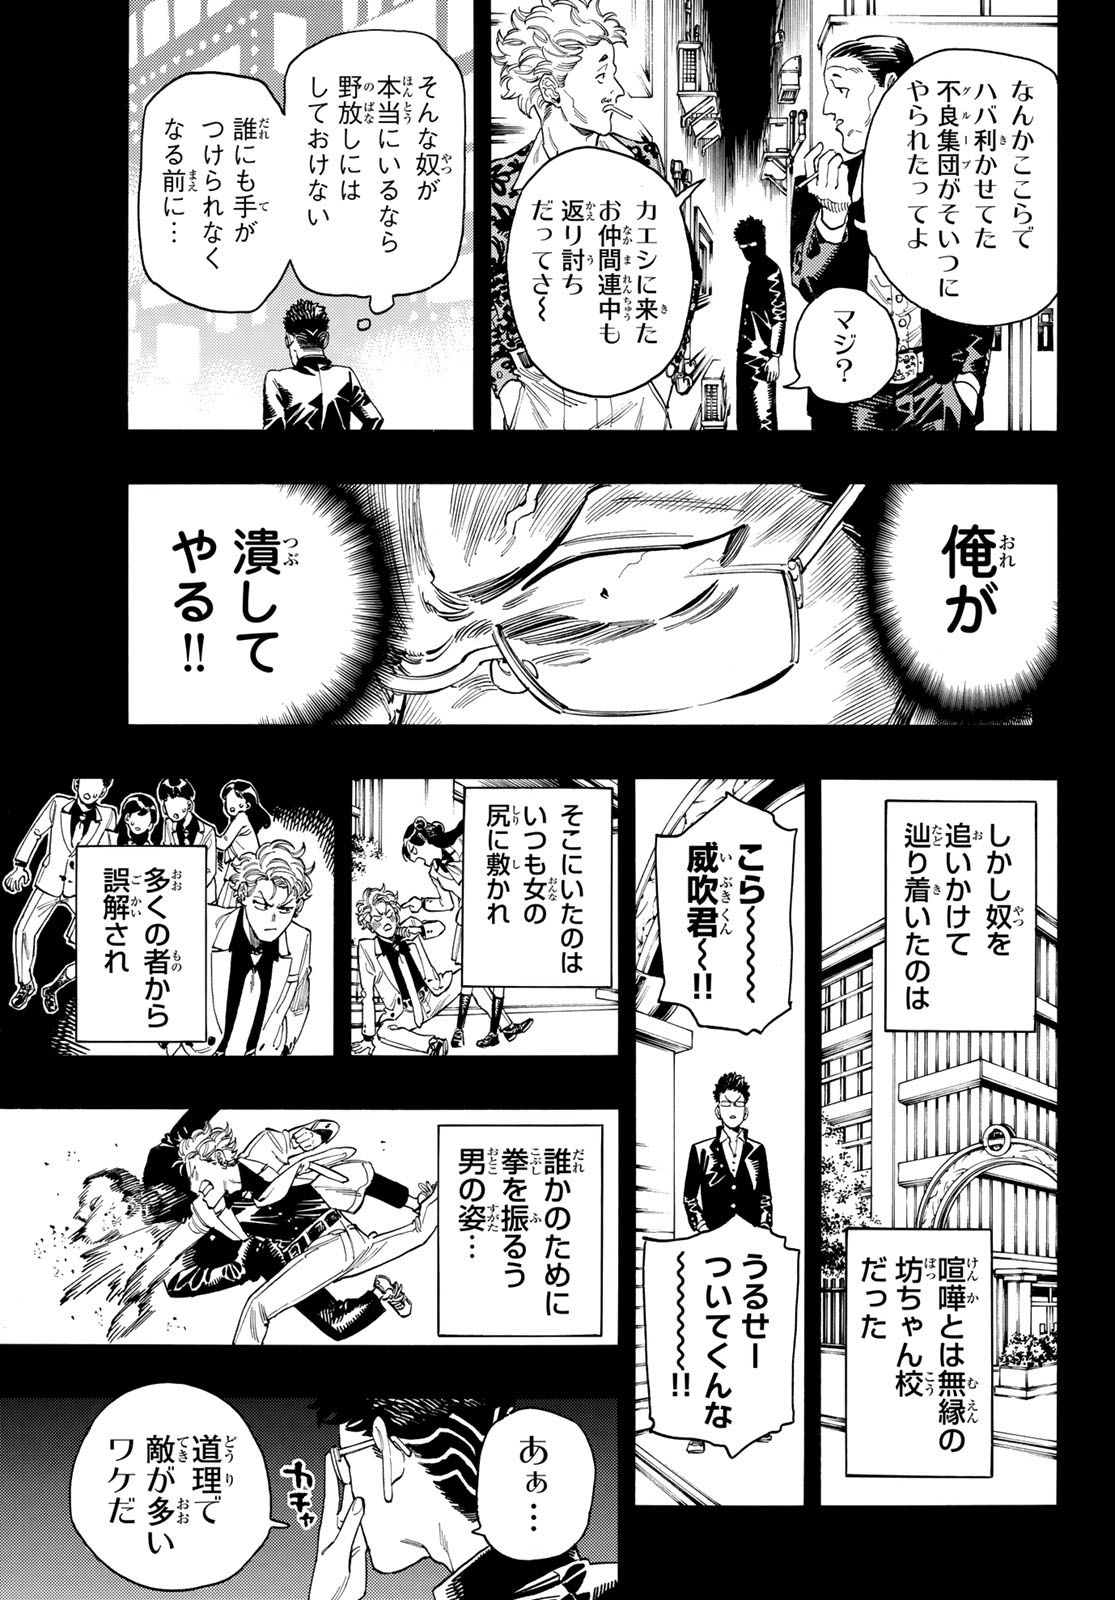 Akabane Honeko no Bodyguard - Chapter 79 - Page 11